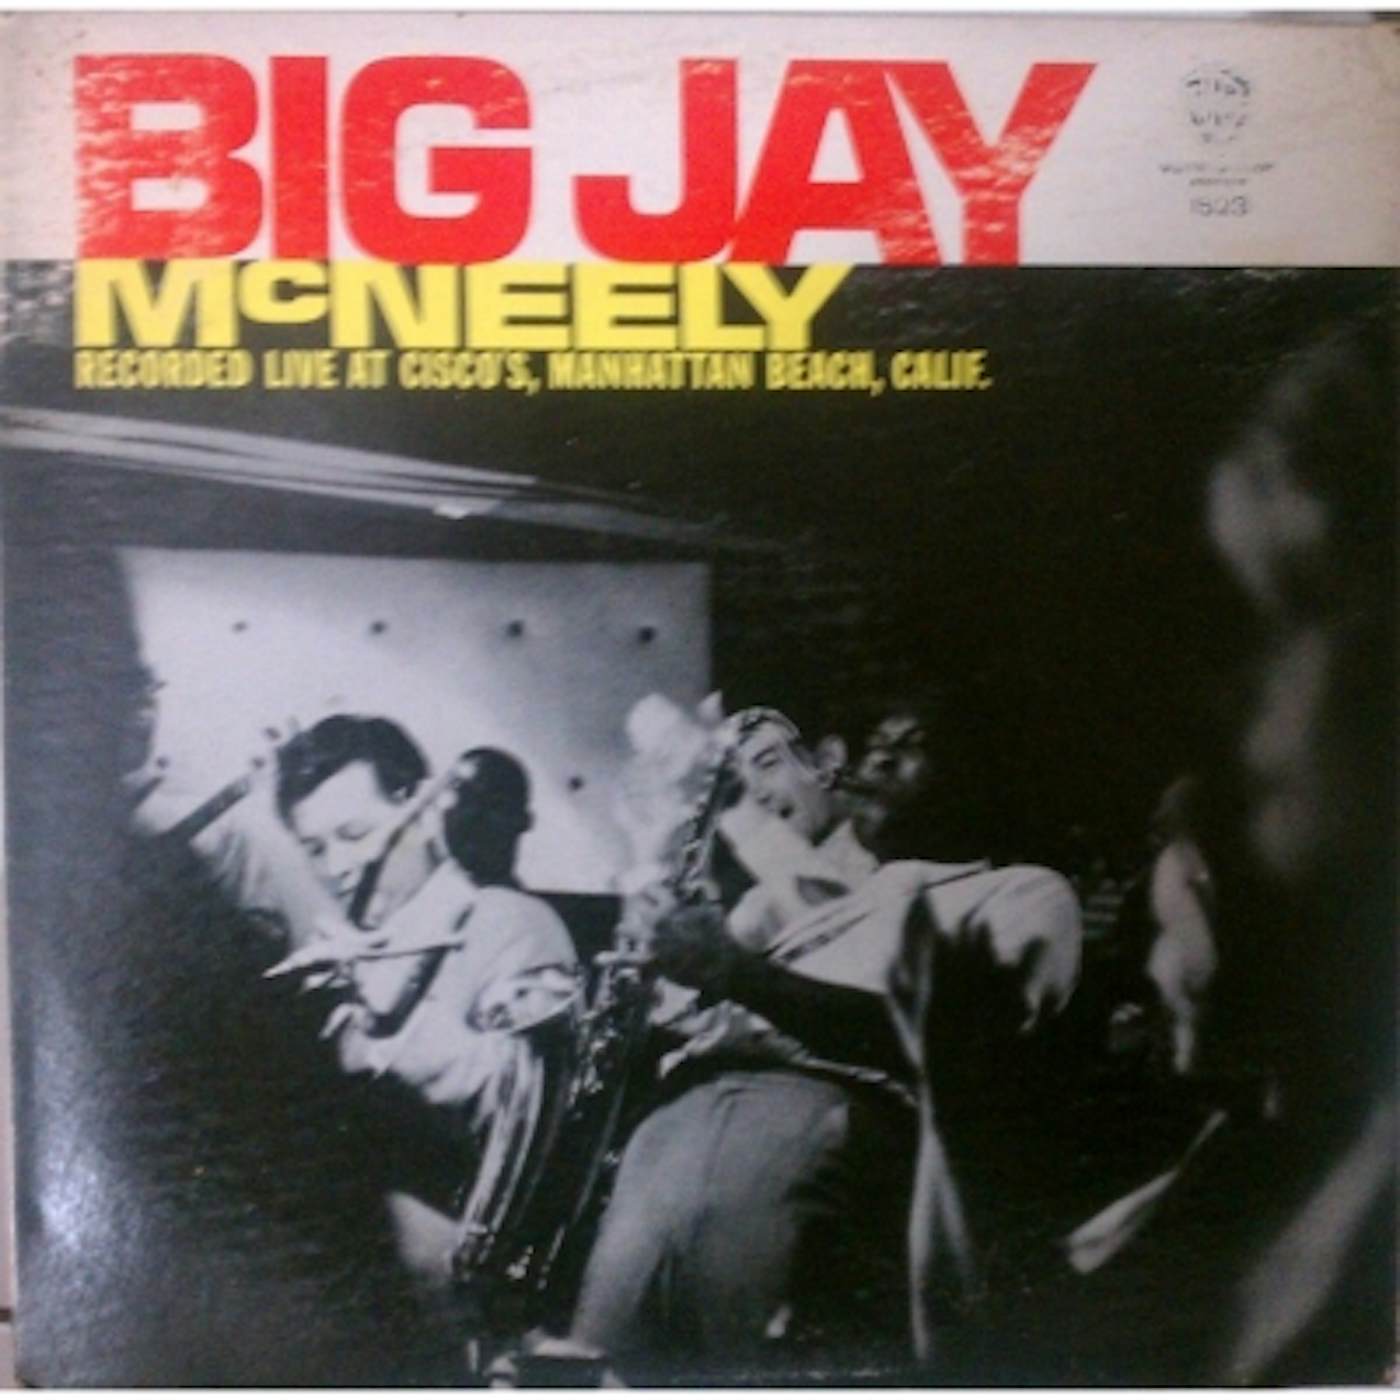 Big Jay McNeely RECORDED LIVE AT CISCO'S. MANHATTAN BEACH CALIF. CD